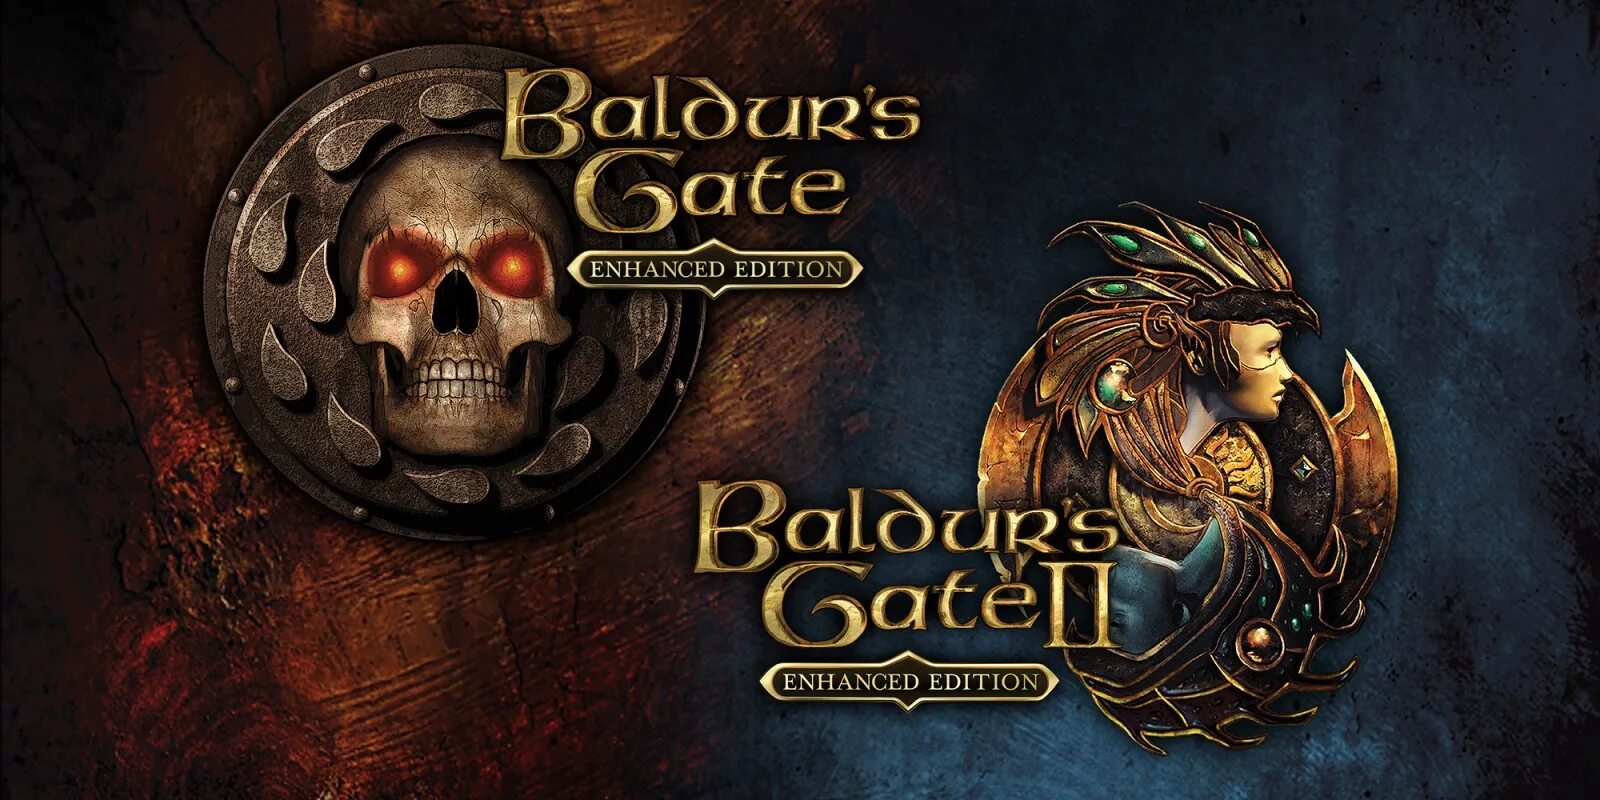 Baldur's Gate 1-2. Baldur's Gate 1 enhanced Edition. Baldur's Gate 2 enhanced Edition. Baldurs Gate and Baldurs Gate 2 enhanced Editions.